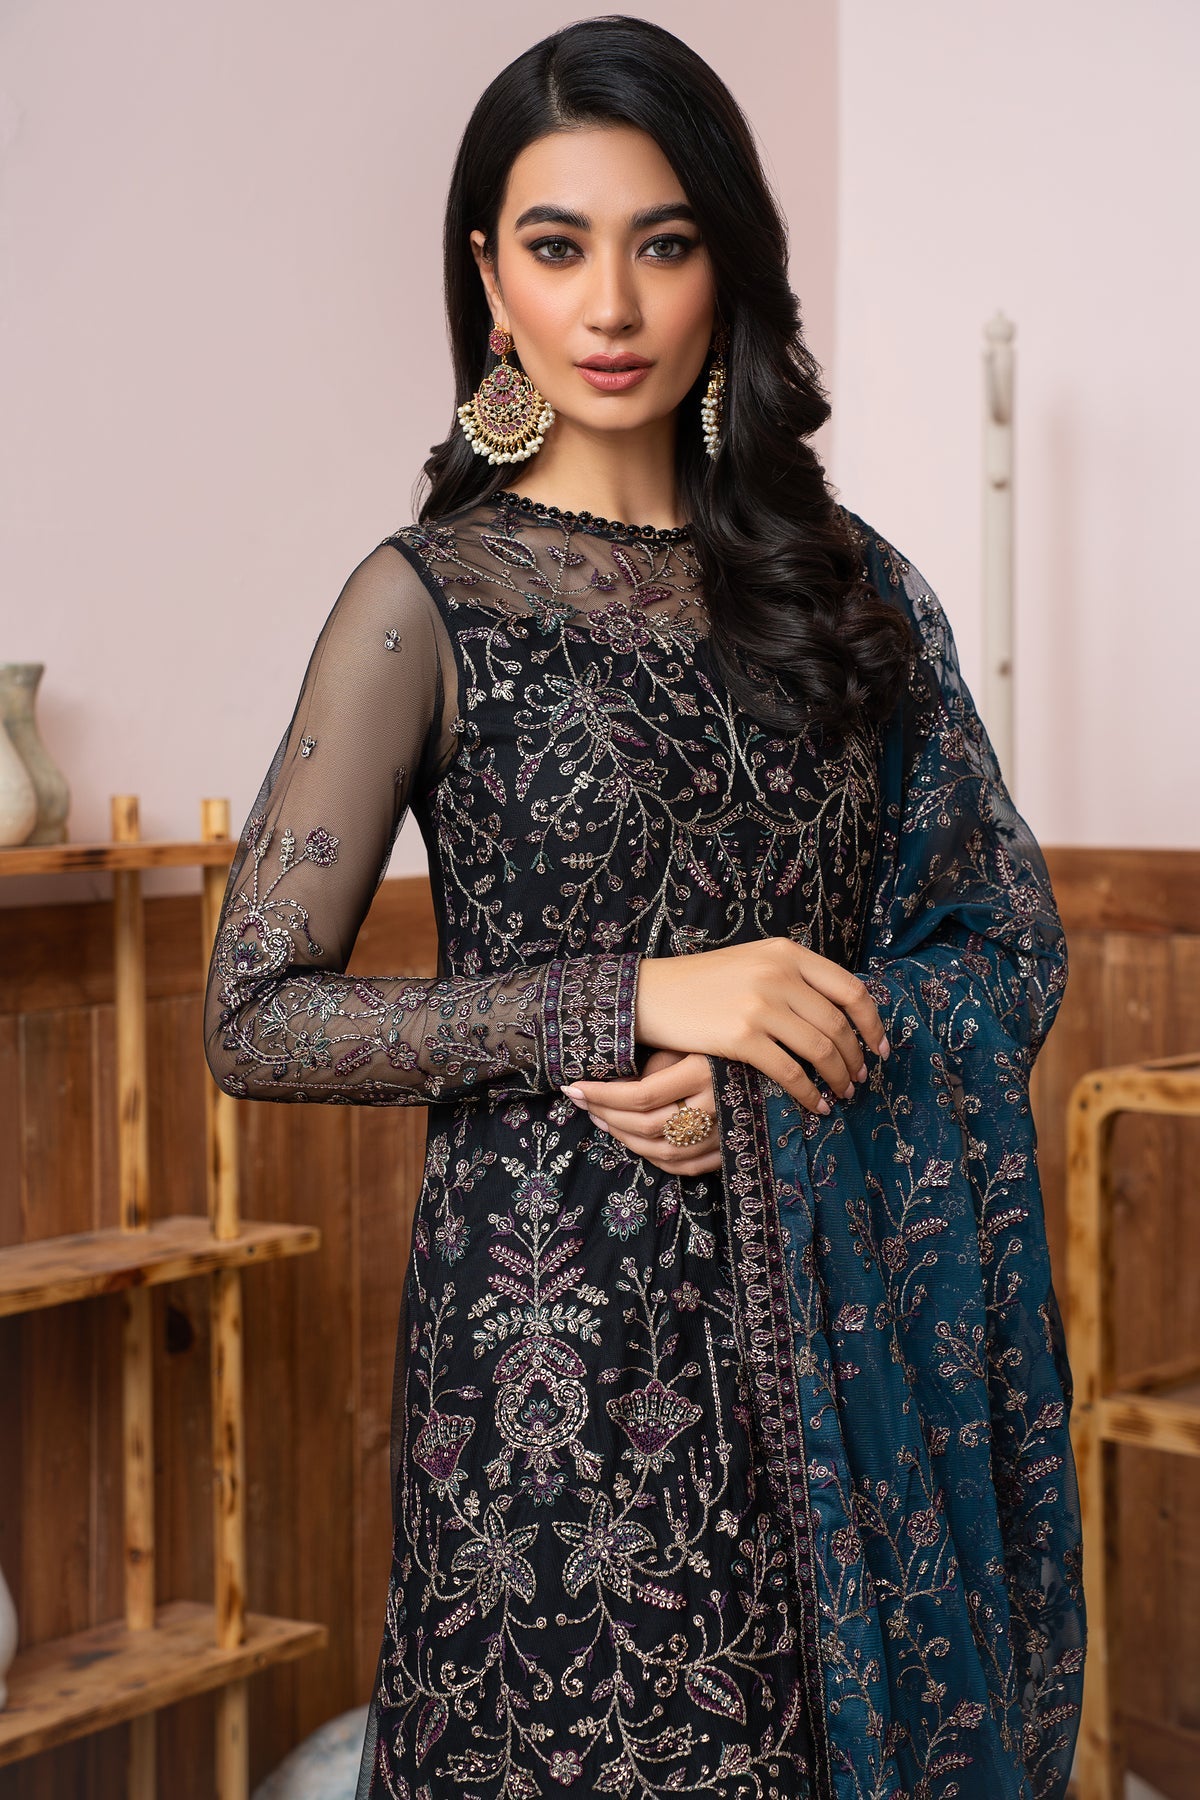 Shop Now, ZIMMEL - ZLM-02 - Meeral Luxury Formals 2023 - Zarif - Shahana Collection UK - Wedding and Bridal Dresses - Pakistani Dresses in UAE - Shahana UK